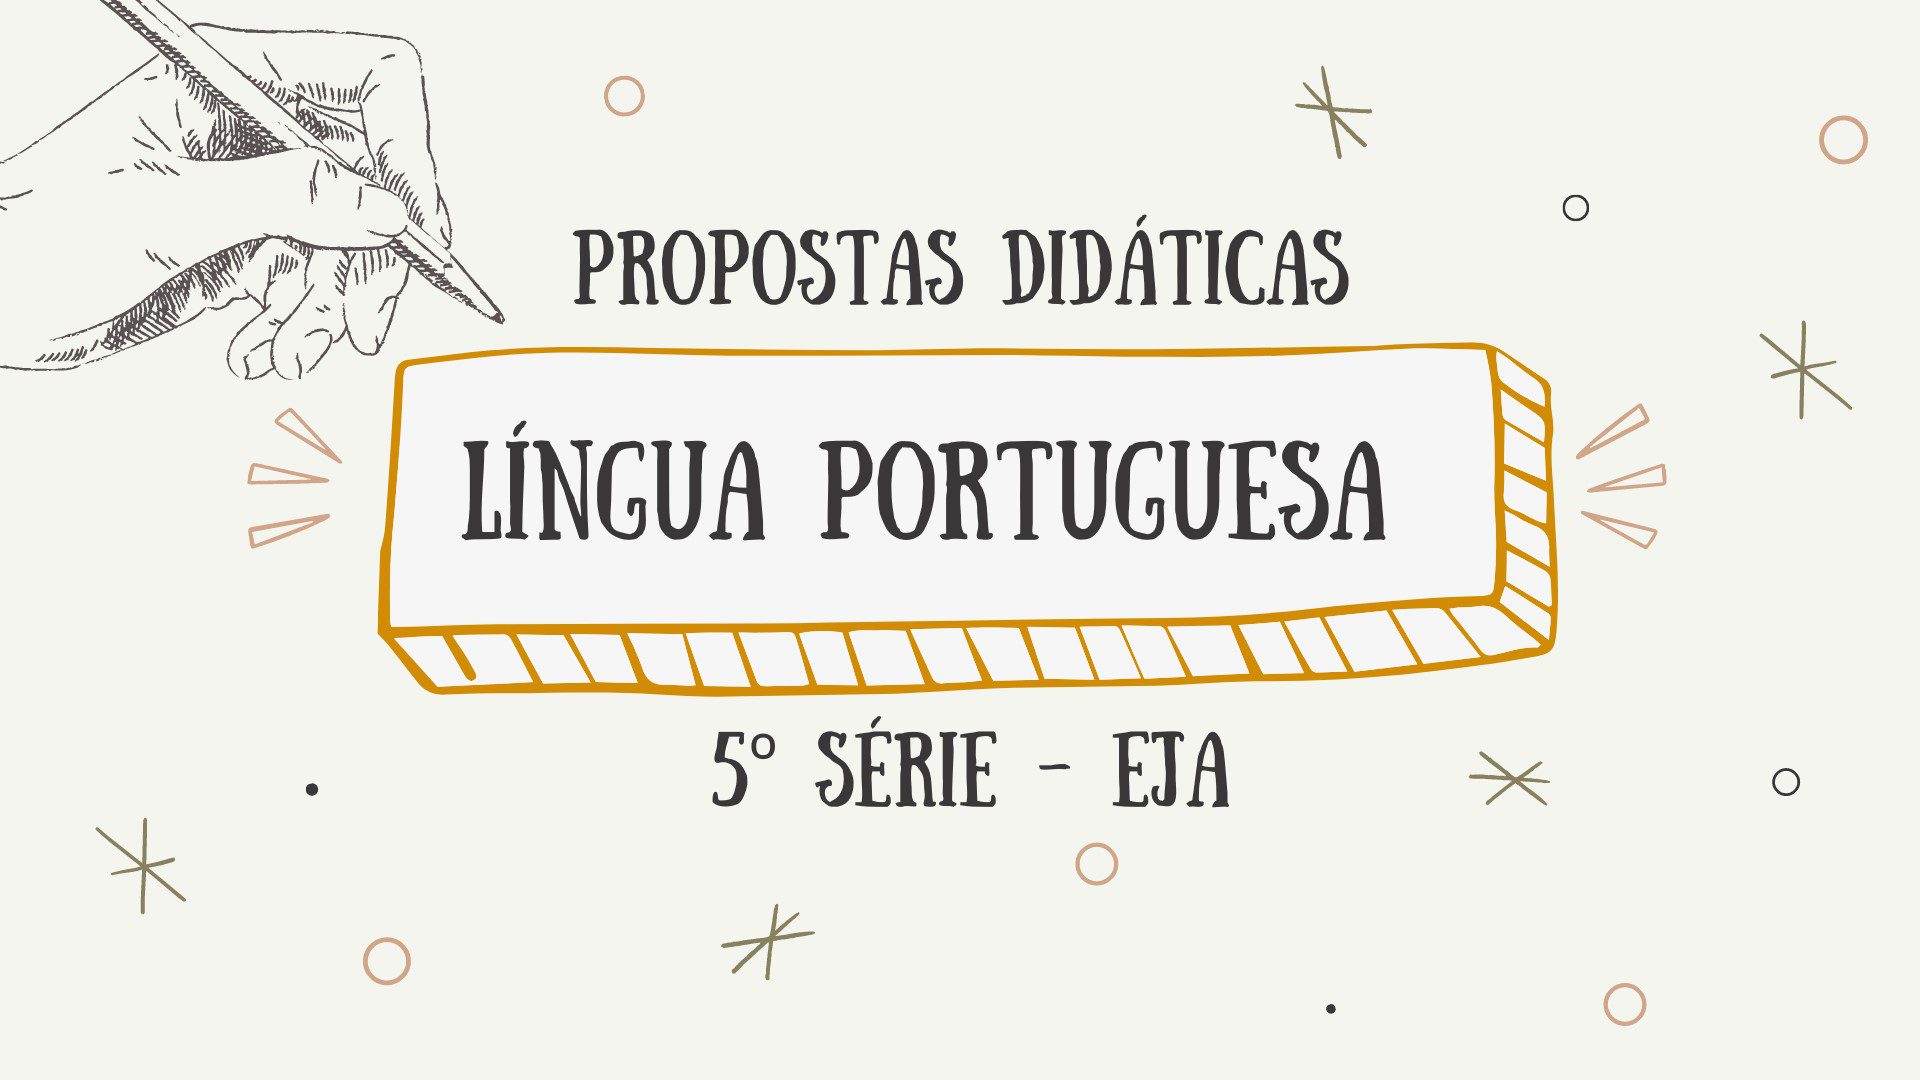 You are currently viewing Propostas didáticas – Língua Portuguesa EJA – 5ª série.